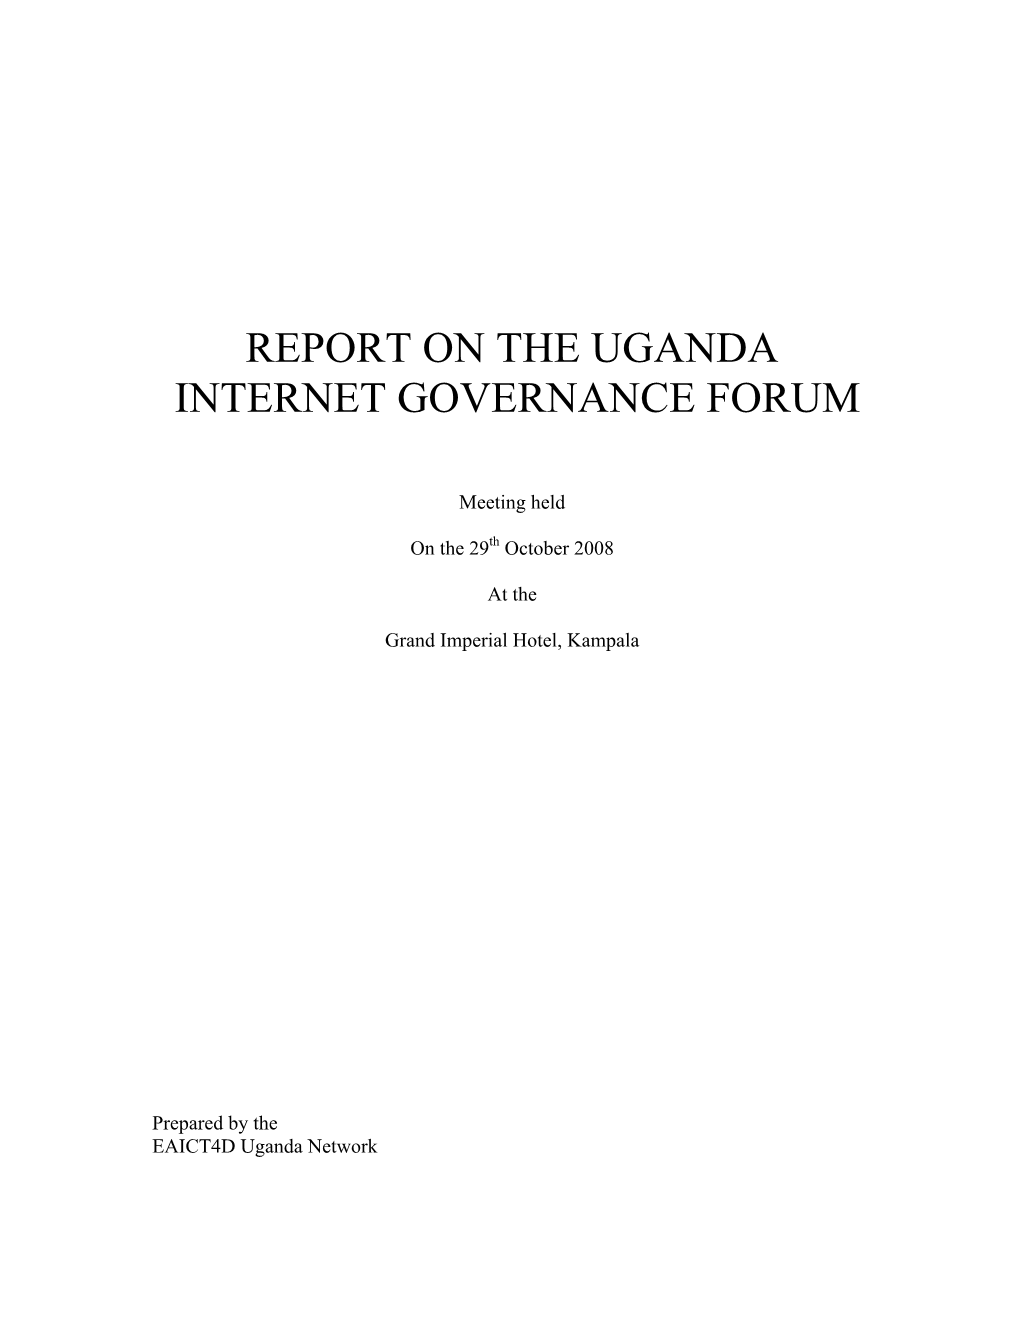 Report on the Uganda Internet Governance Forum